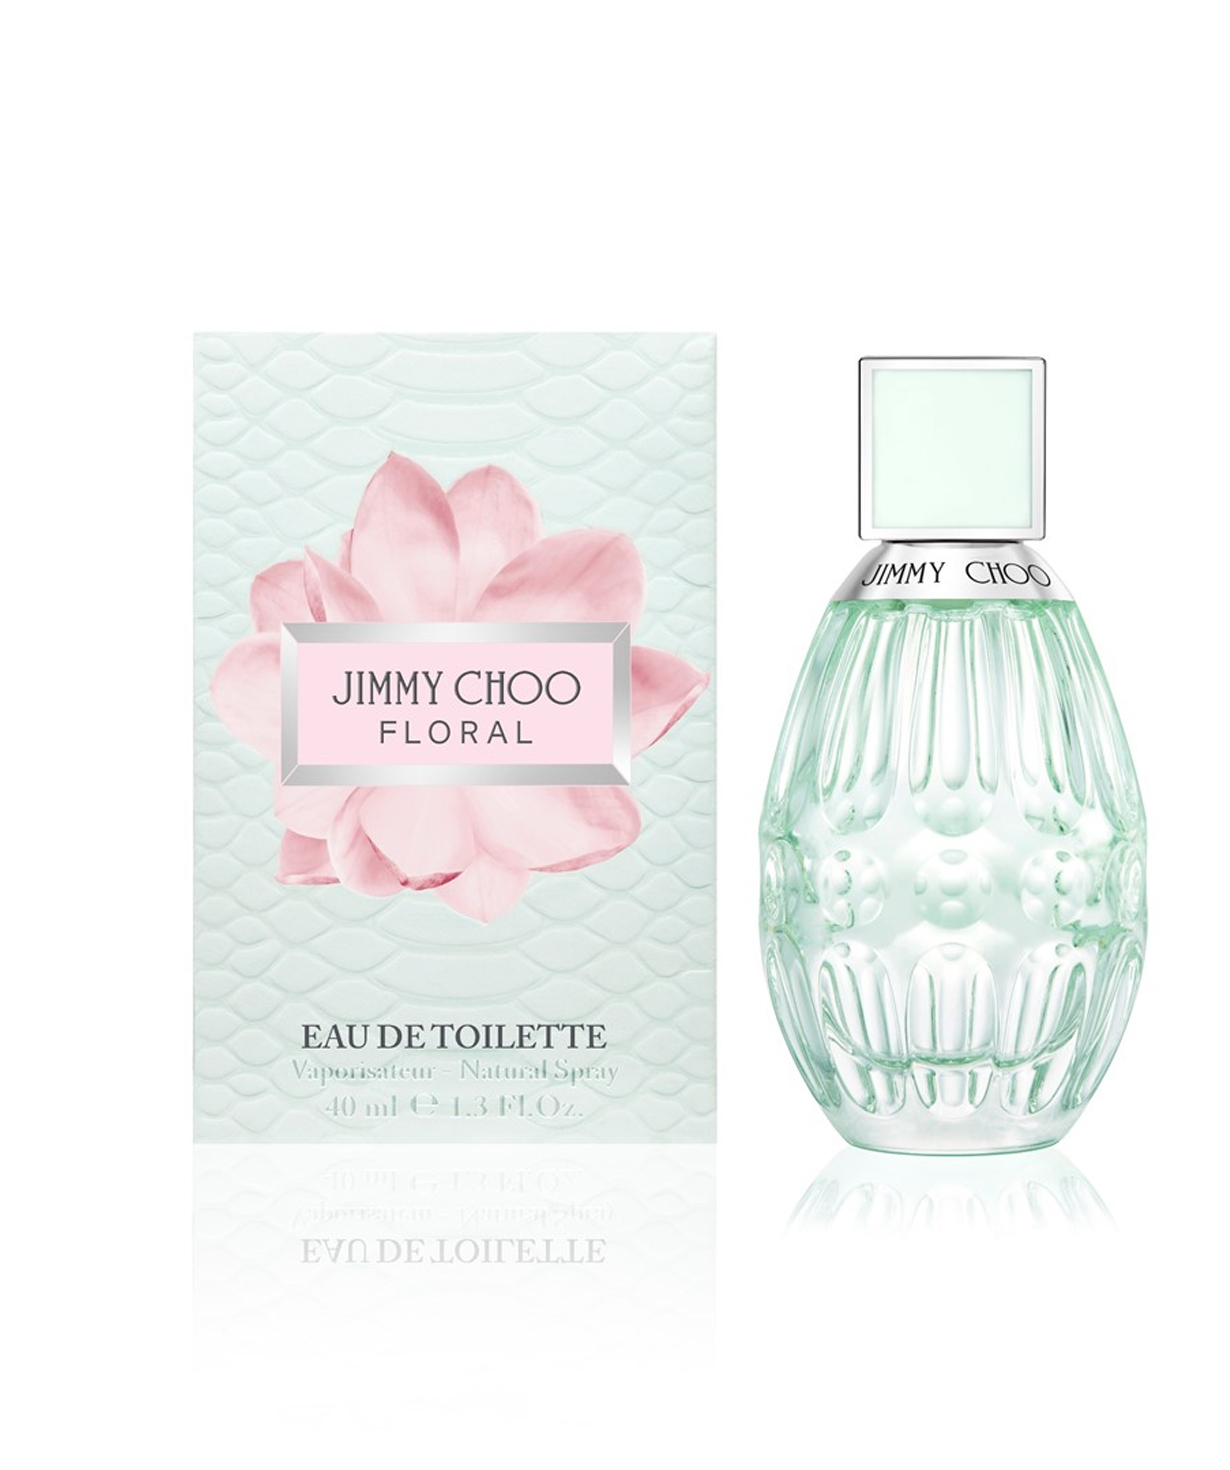 Perfume «Jimmy Choo» Floral, for women, 40 ml